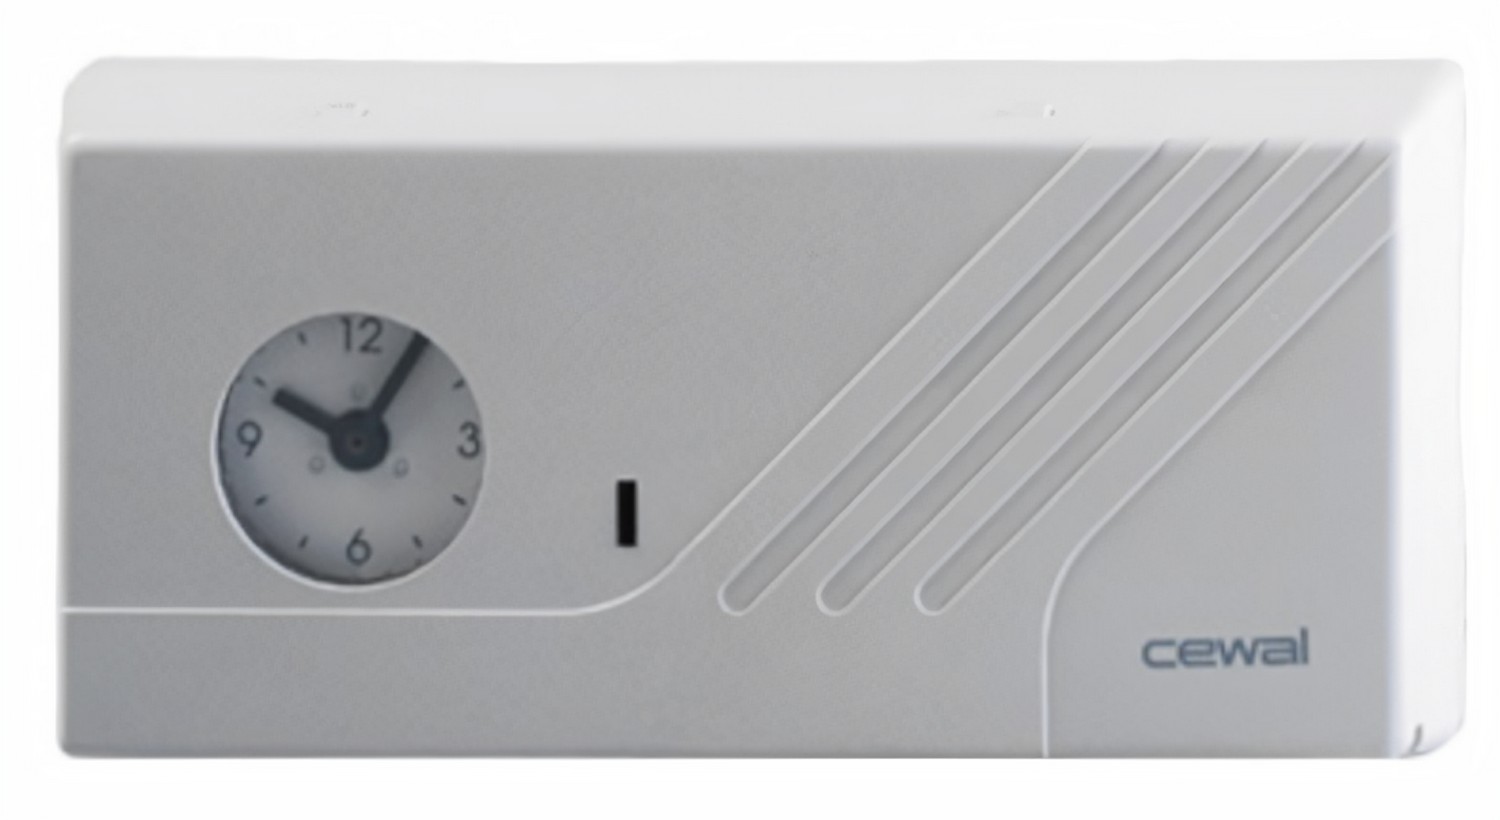 Терморегулятор Cewal RTC 20 в интернет-магазине, главное фото